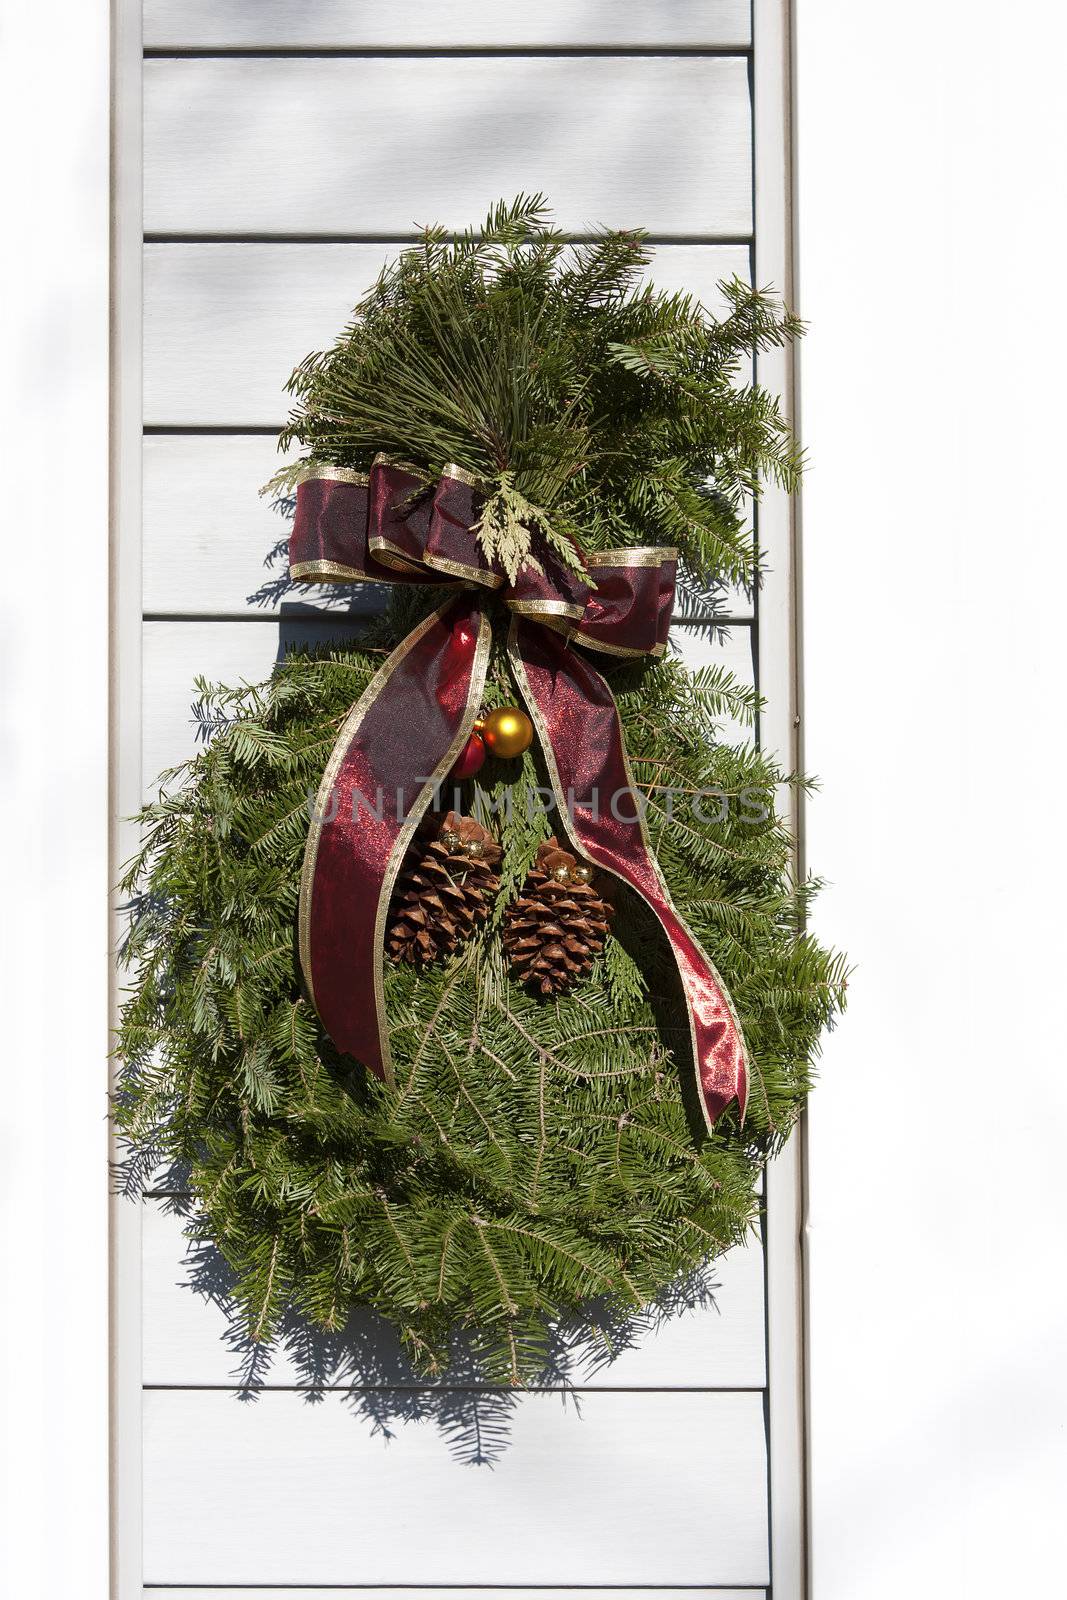 Christmas wreath hangs on the siding of a house.